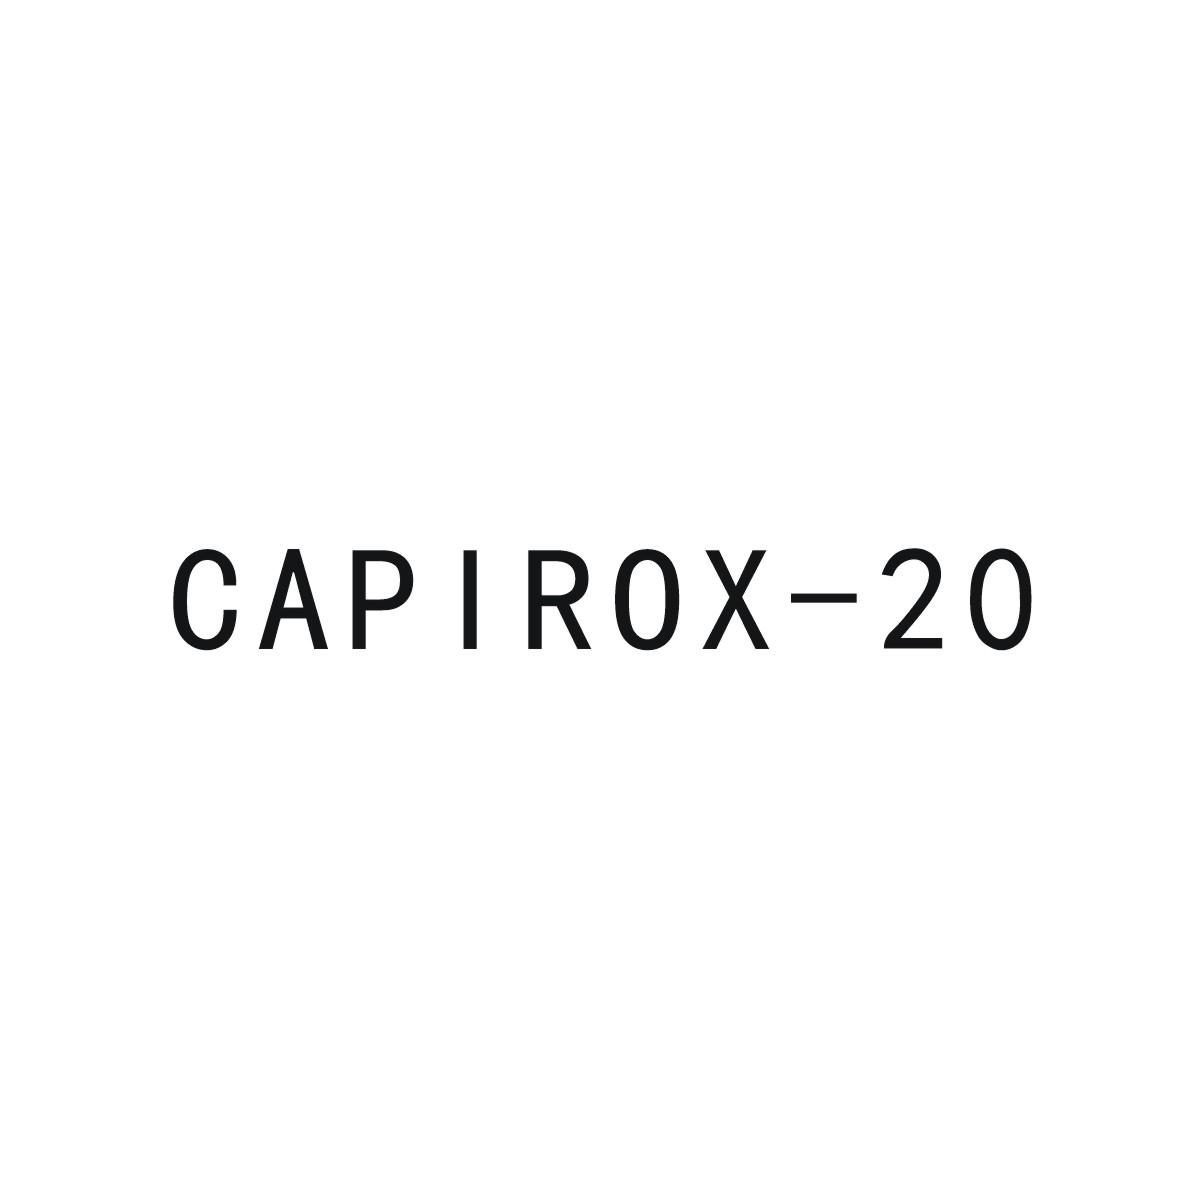 CAPIROX-20商标转让